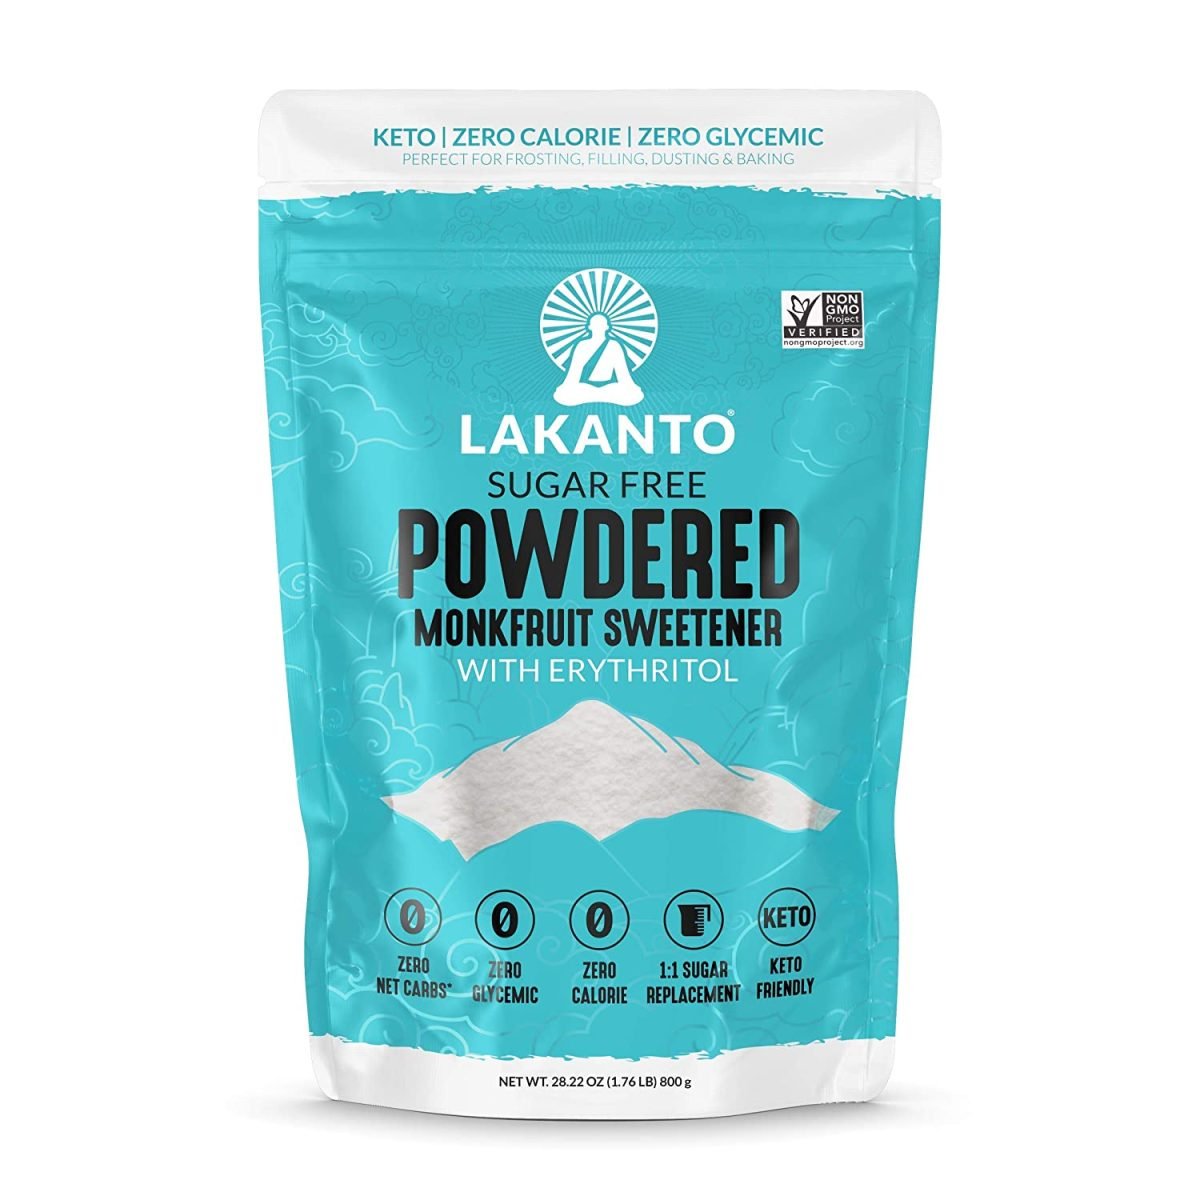 Lakanto MonkFruit Sweetener-save 15% with promo code: POUND15